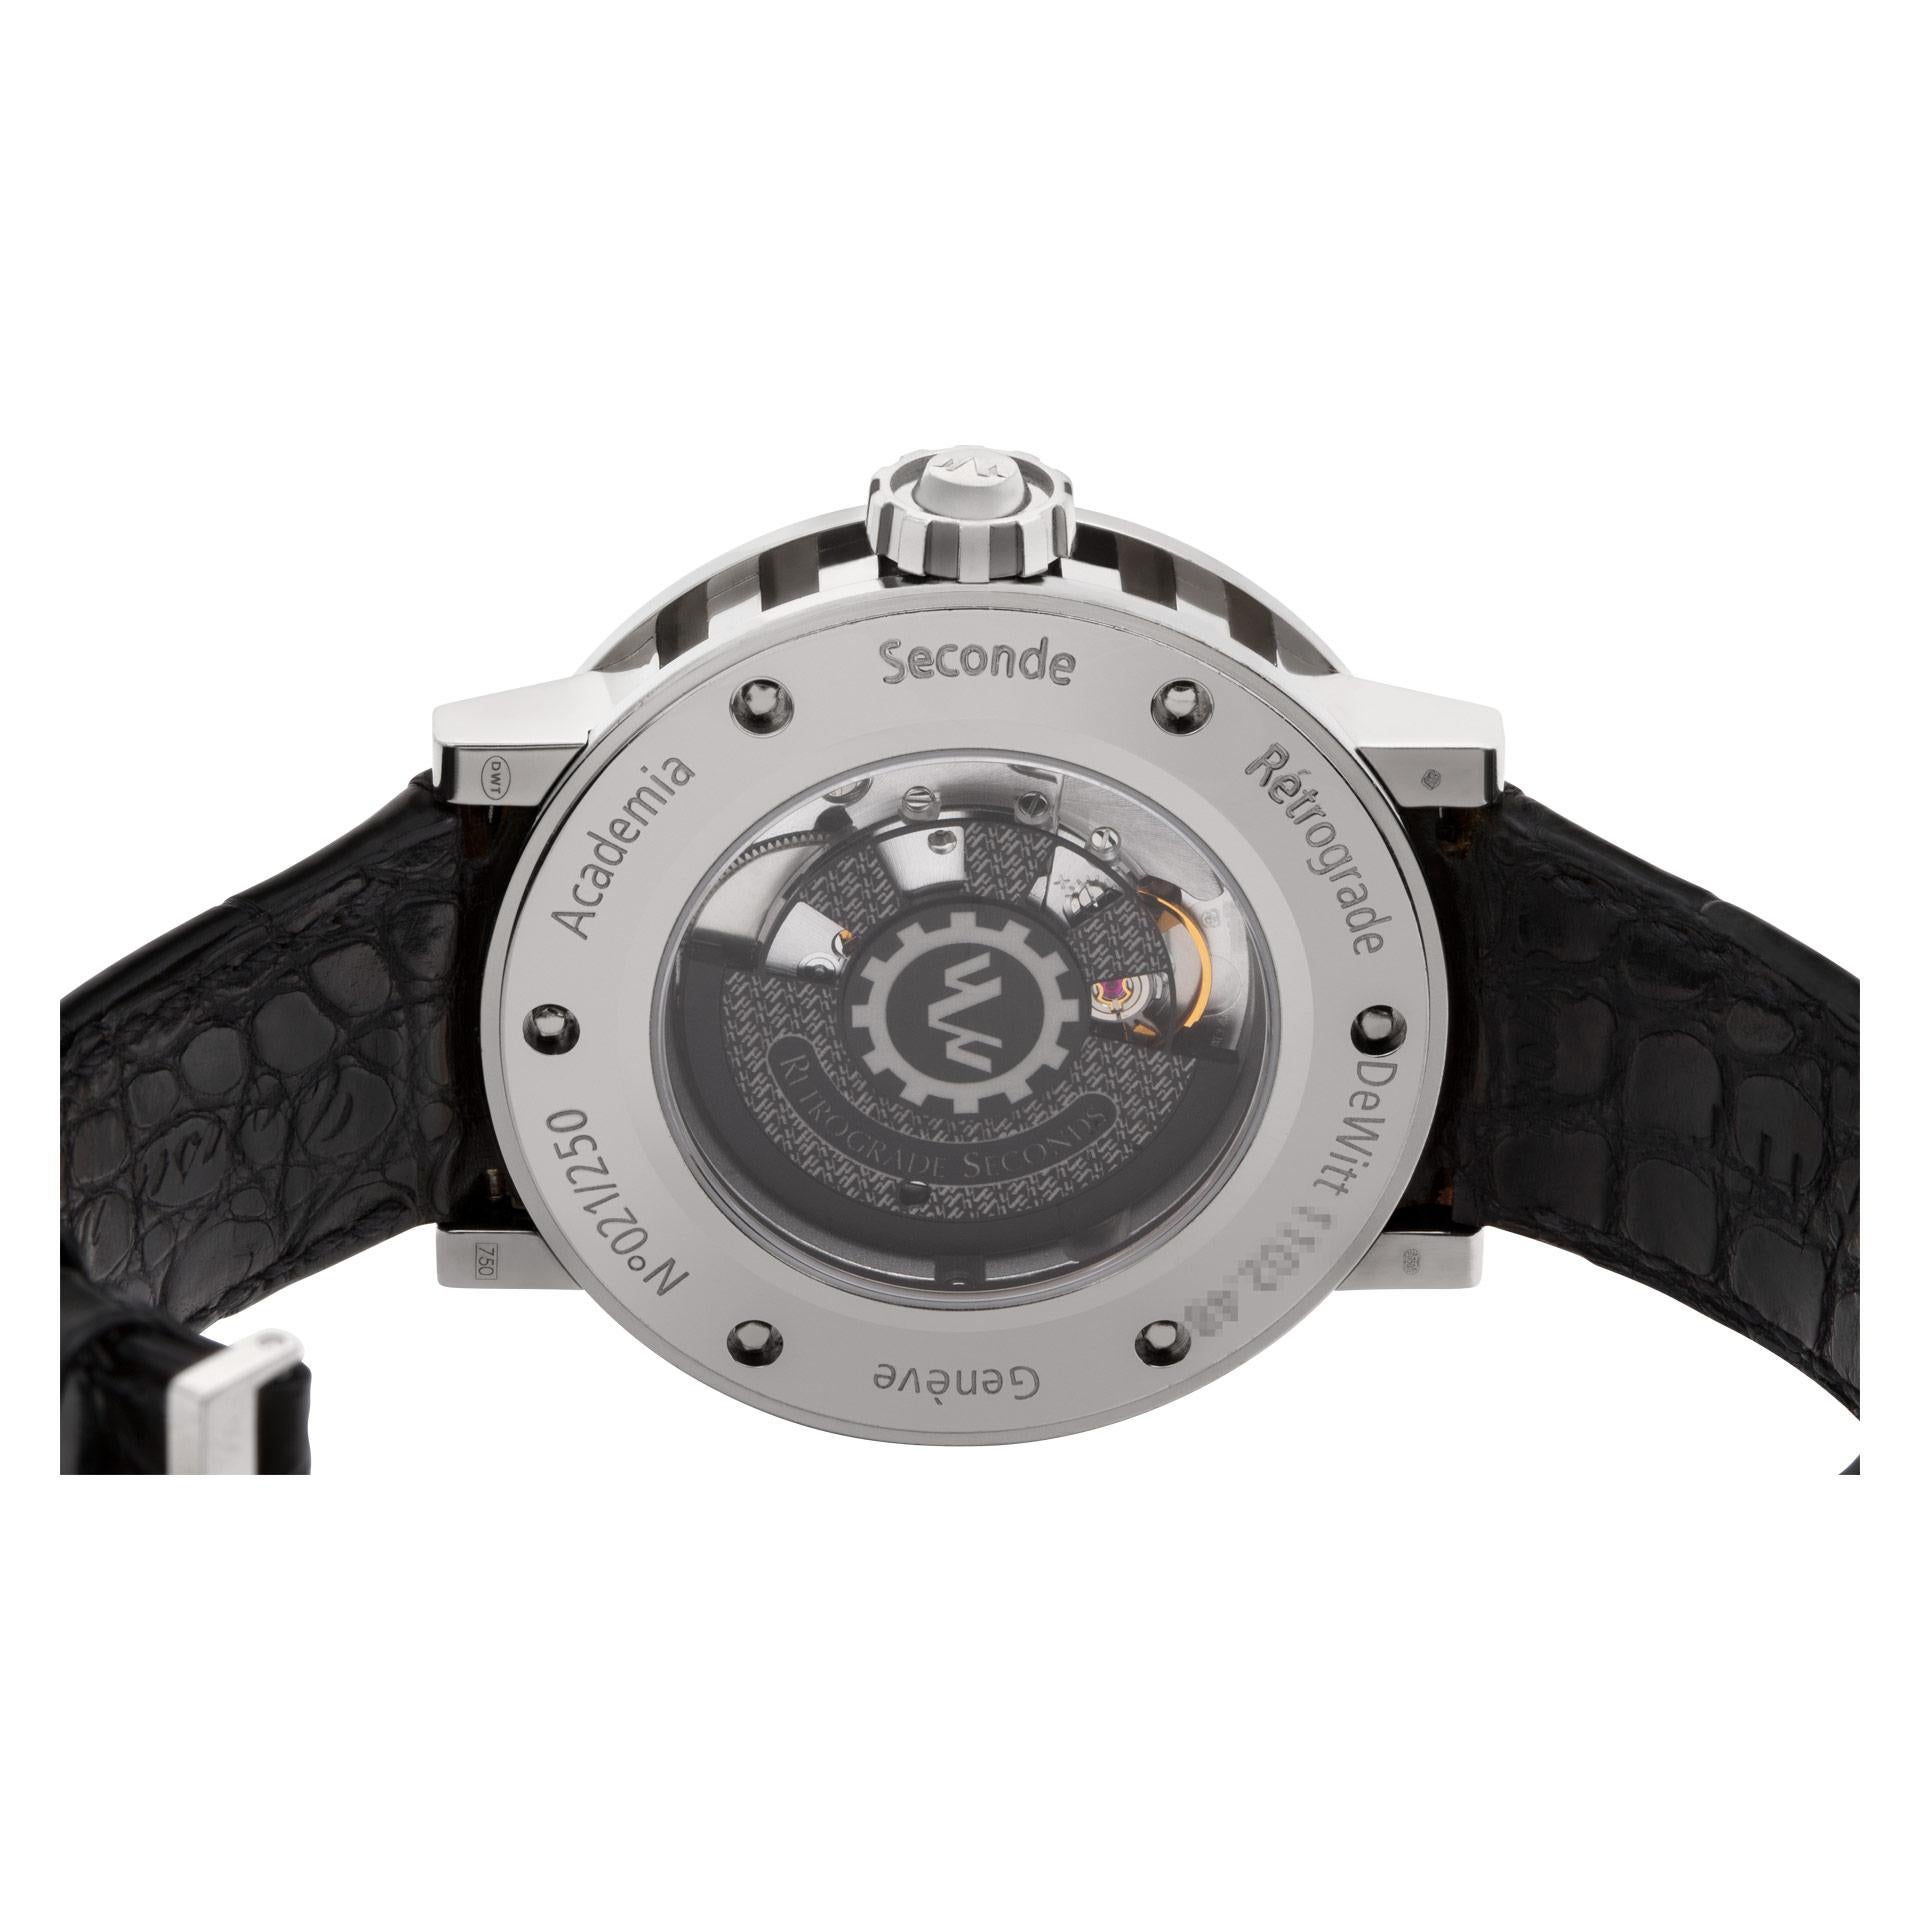 DeWitt Academia Seconde Retrograde 18k white gold Auto wristwatch For Sale 2